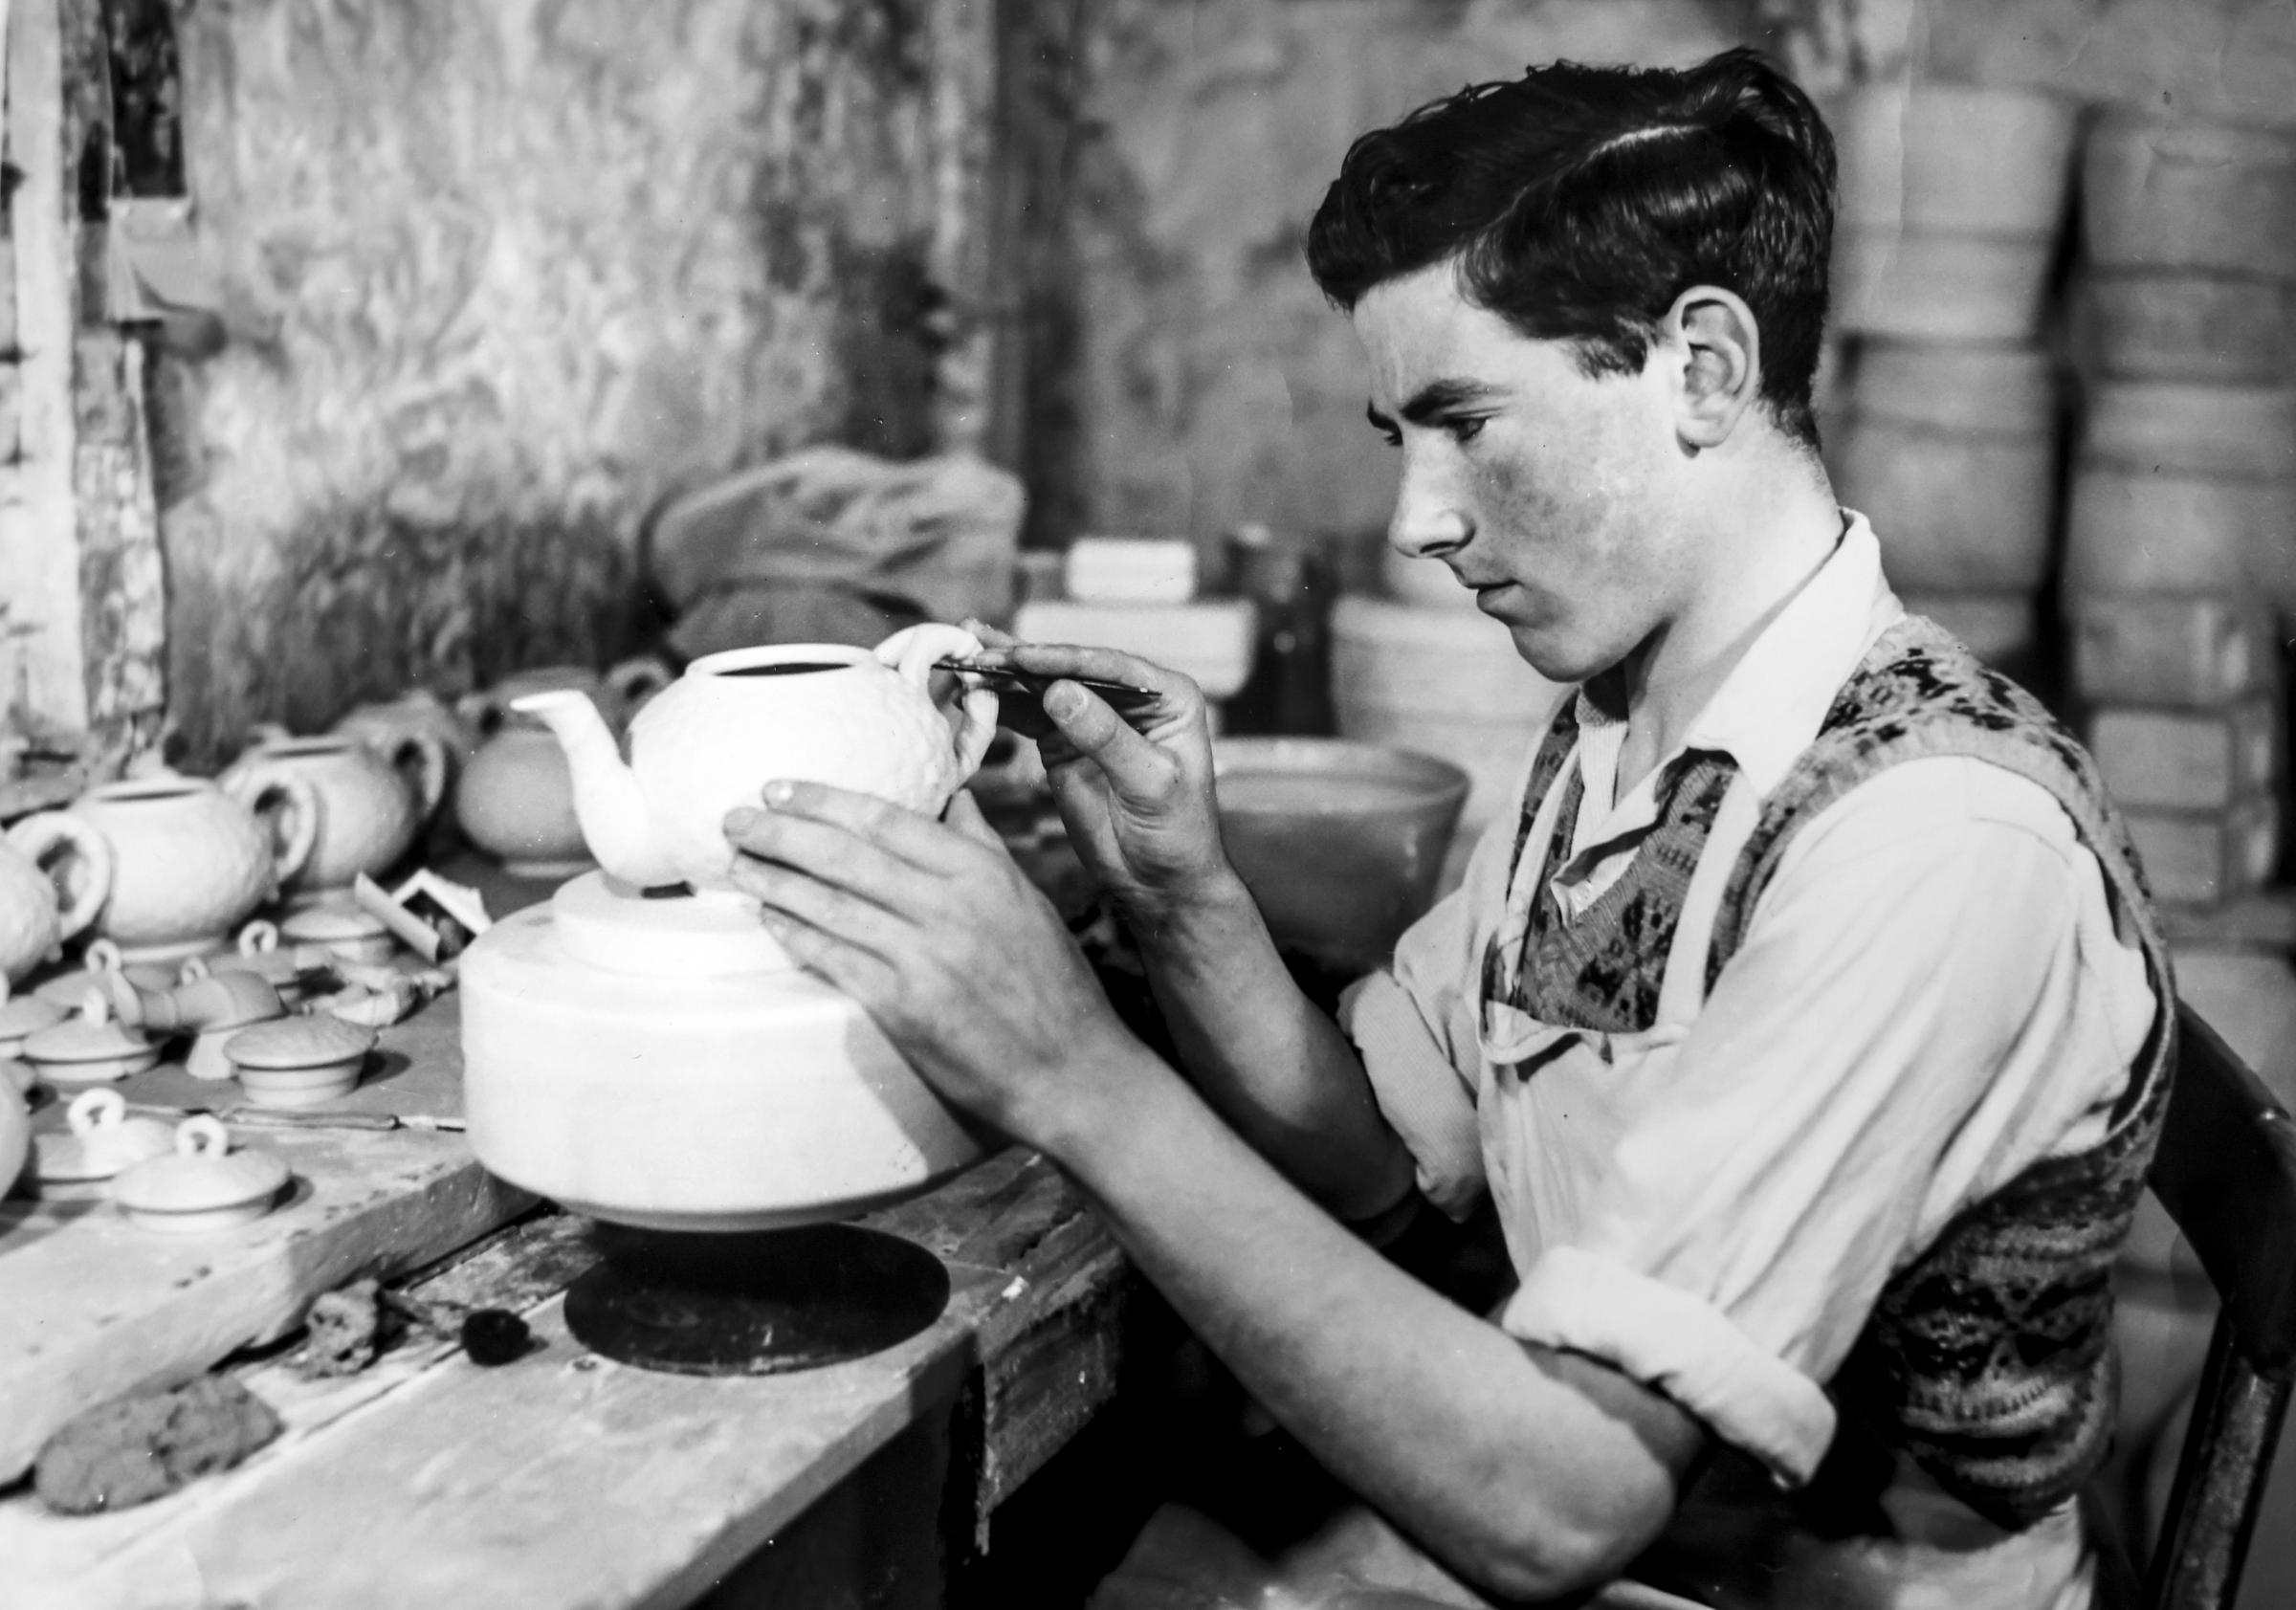 Sean OLoughlin working on a piece of Belleek Pottery in 1958.